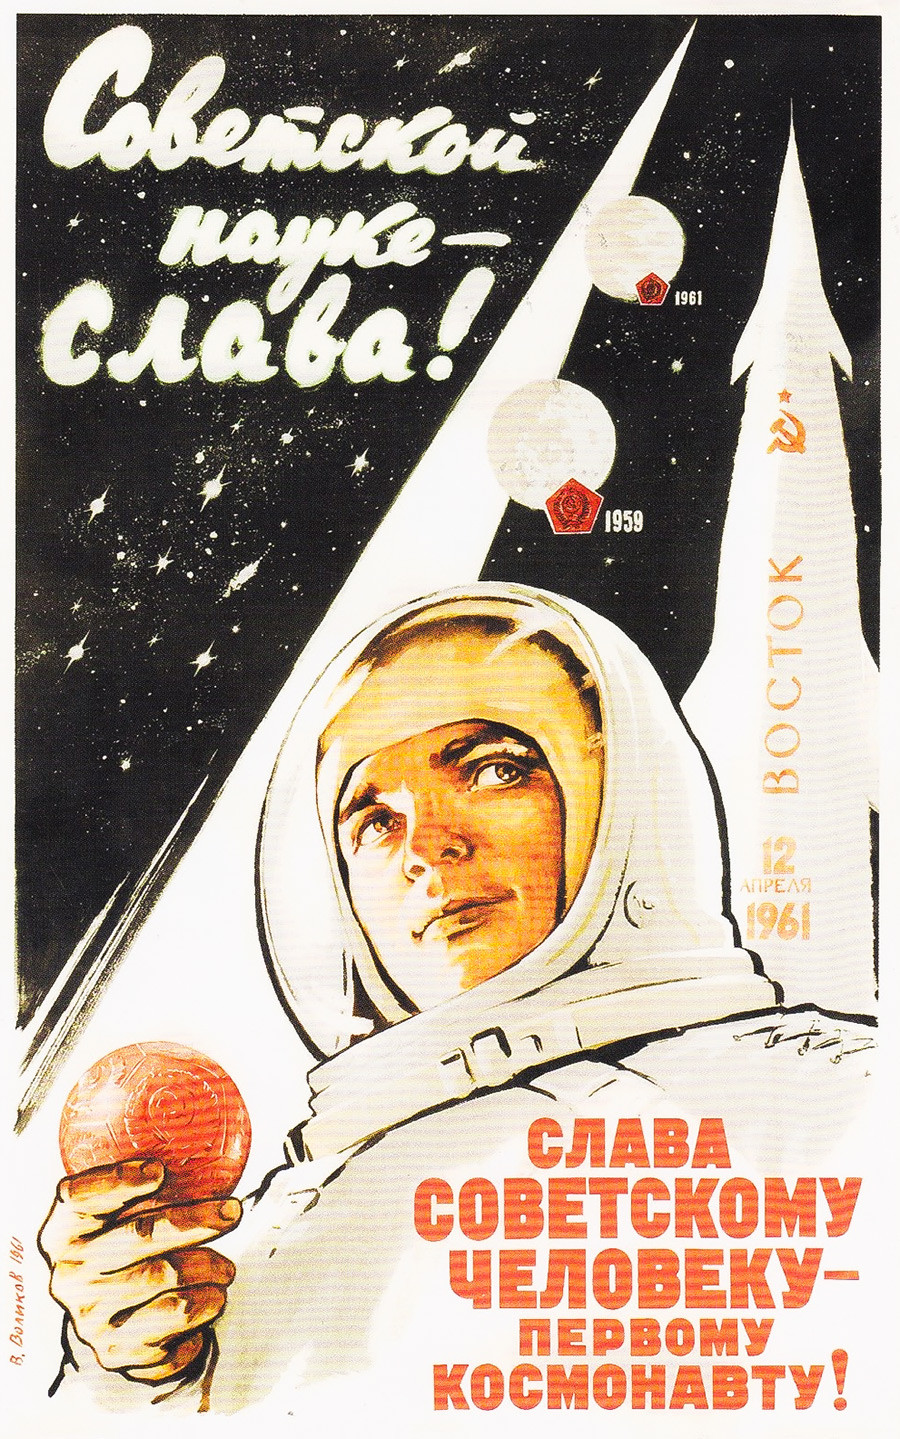 Glory to Soviet science! Glory to Soviet man – the first cosmonaut! 

